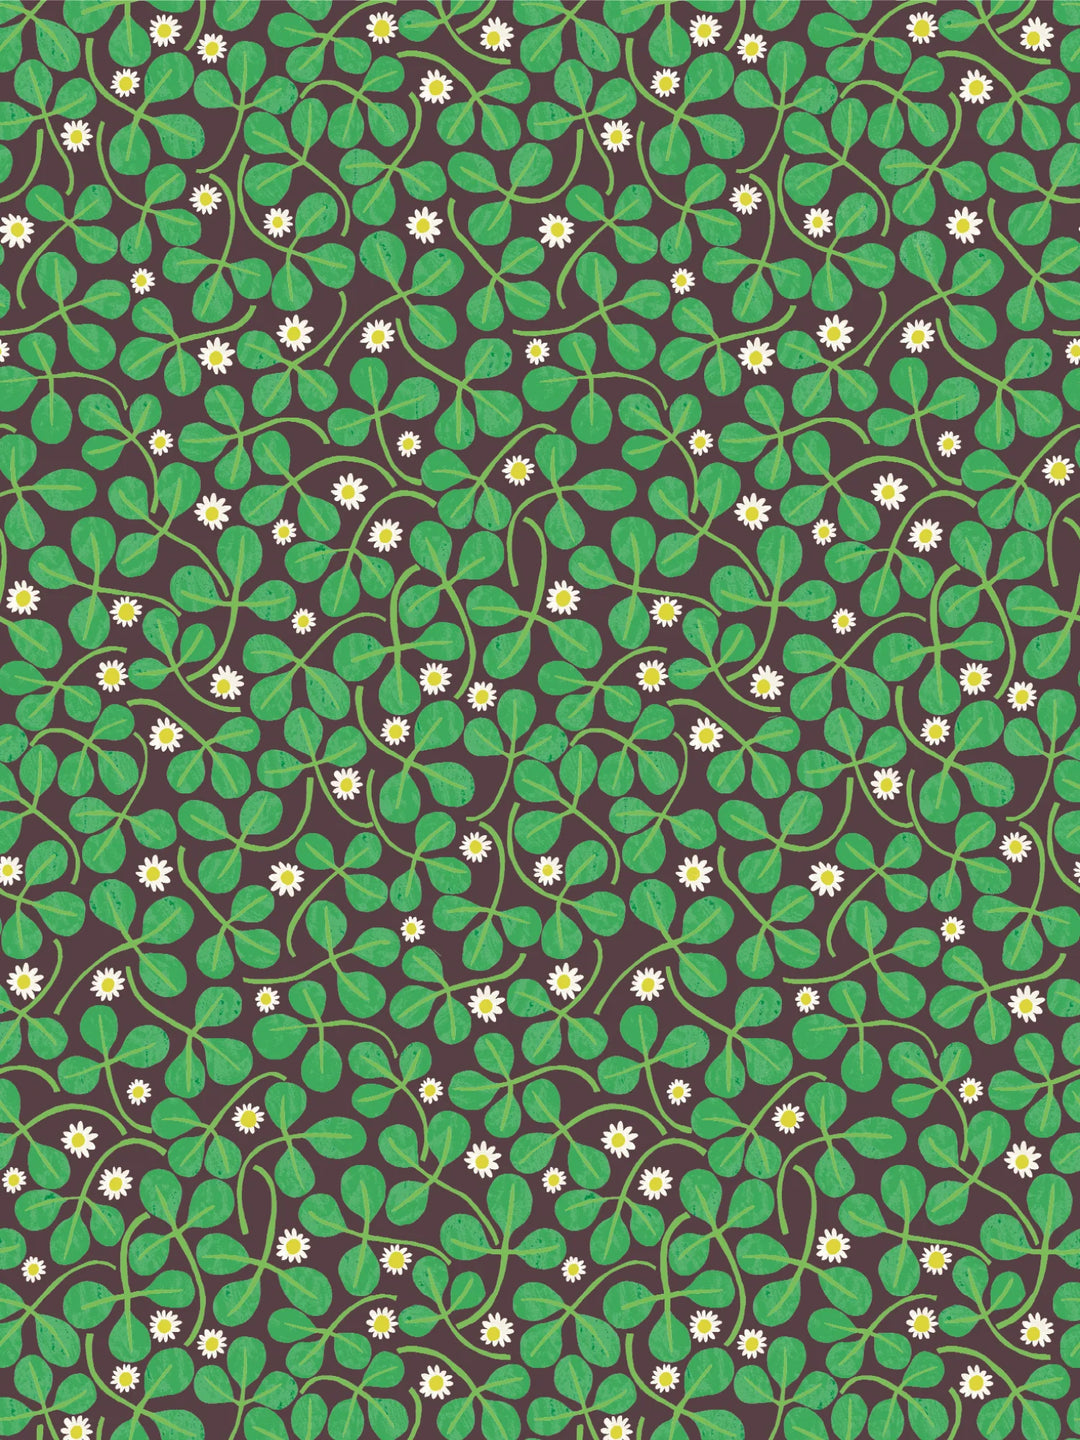 clover-wallpaper-emerald-green-black-background-daisy-ditsy-wallcovering